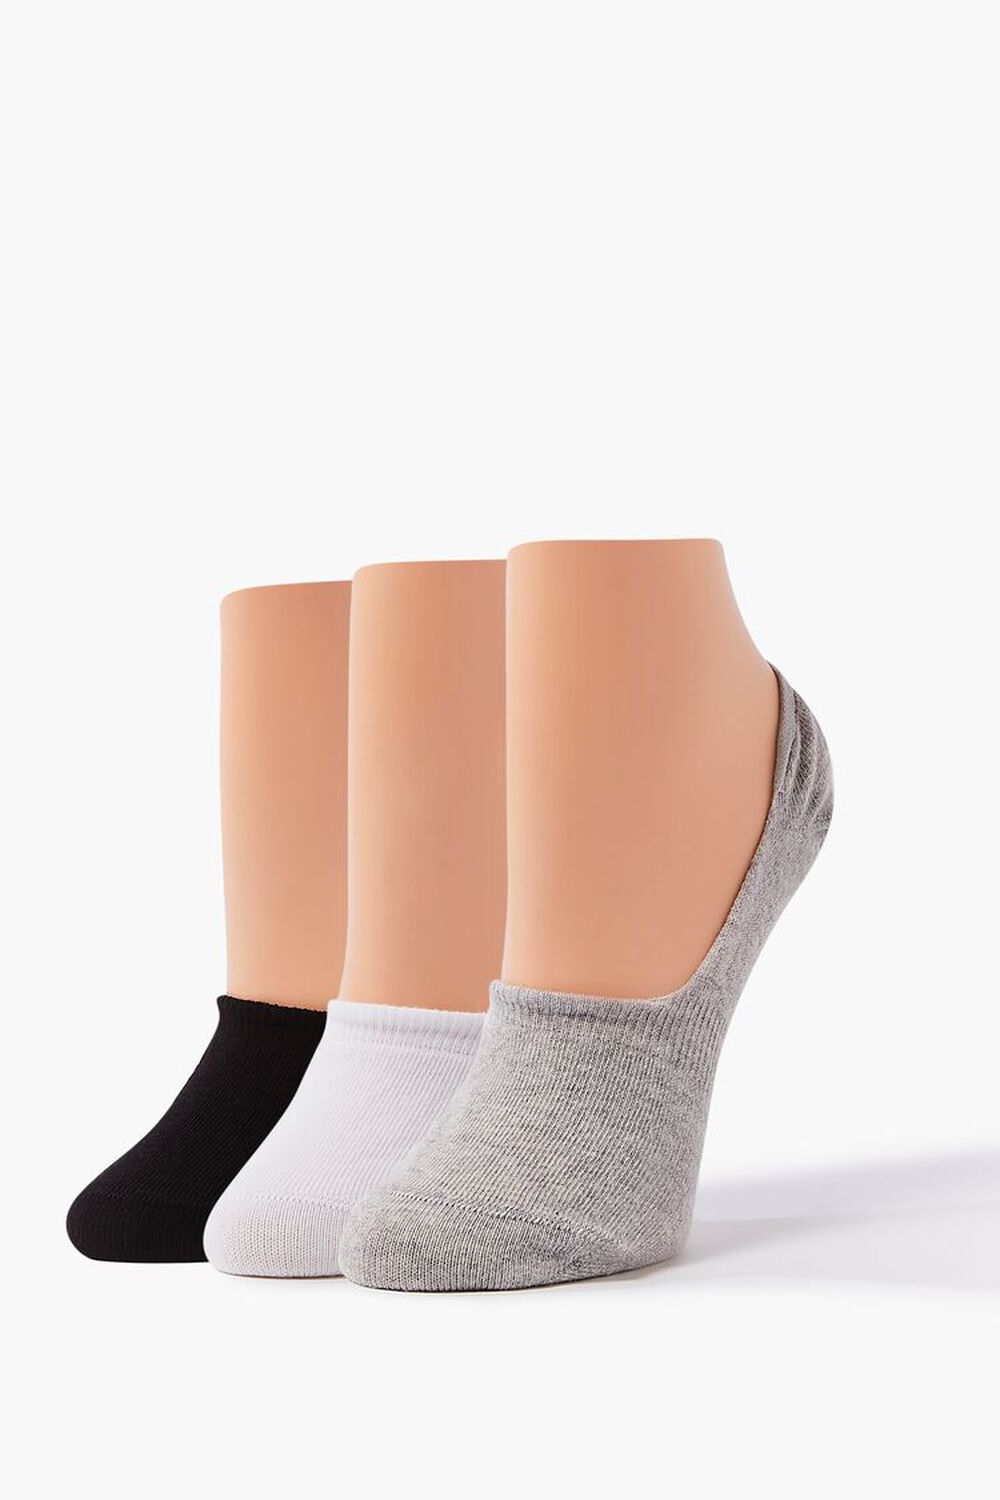 BLACK/GREY No-Show Sock Set, image 1